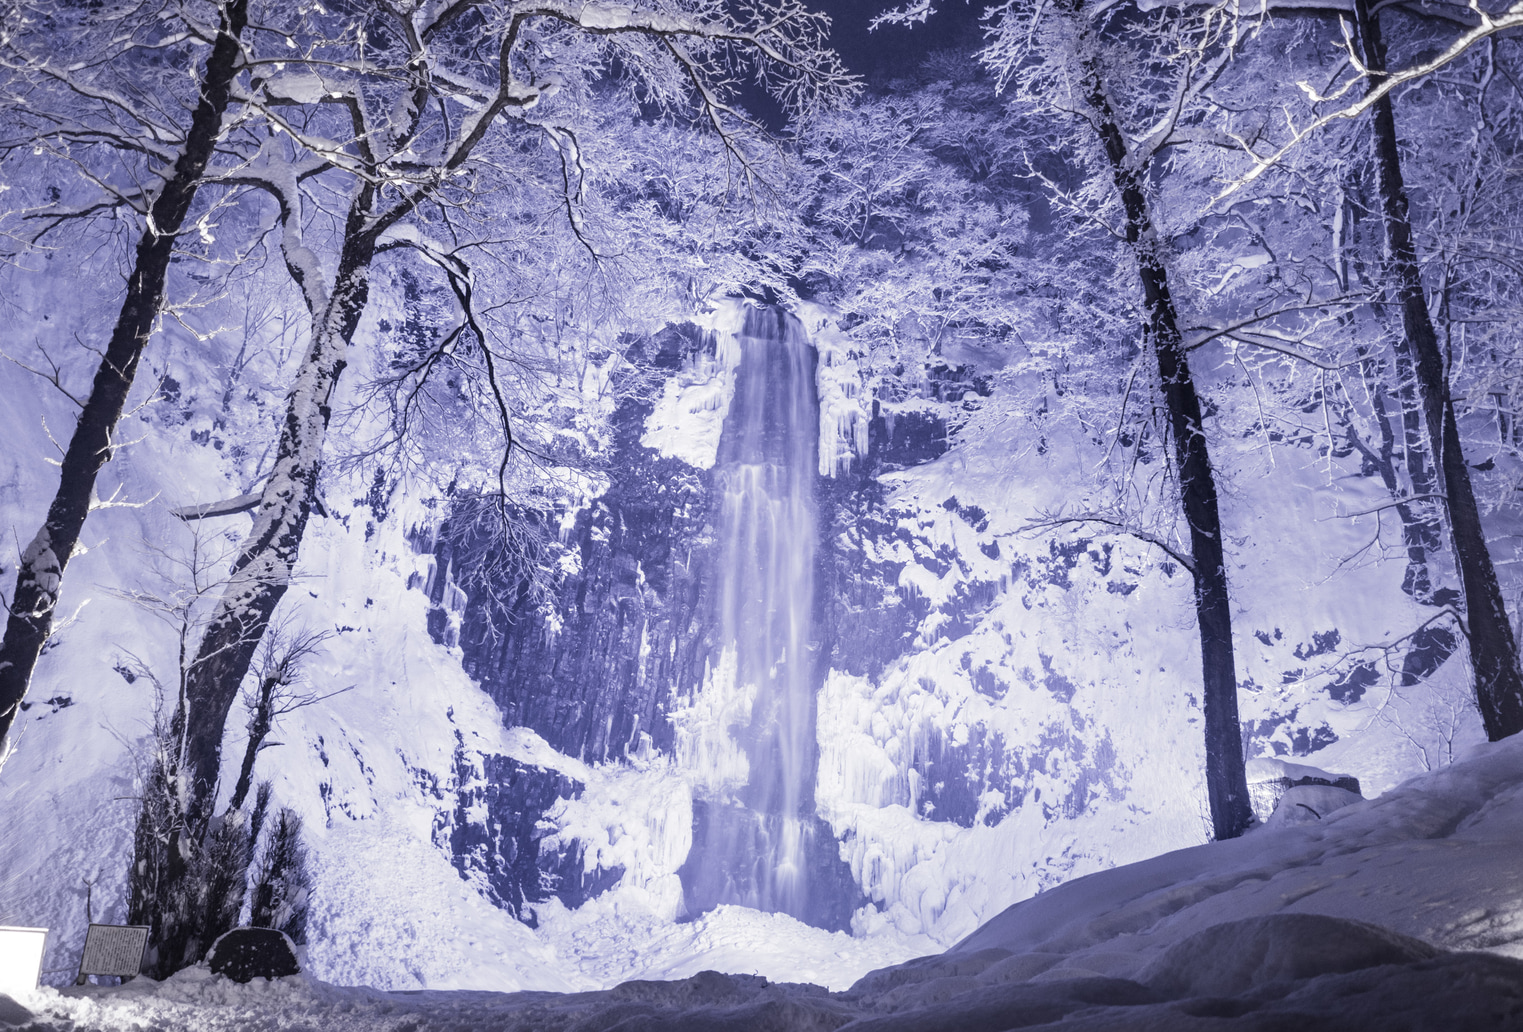 Tour Japan: What To Do in Shonai, Yamagata’s Winter Wonderland